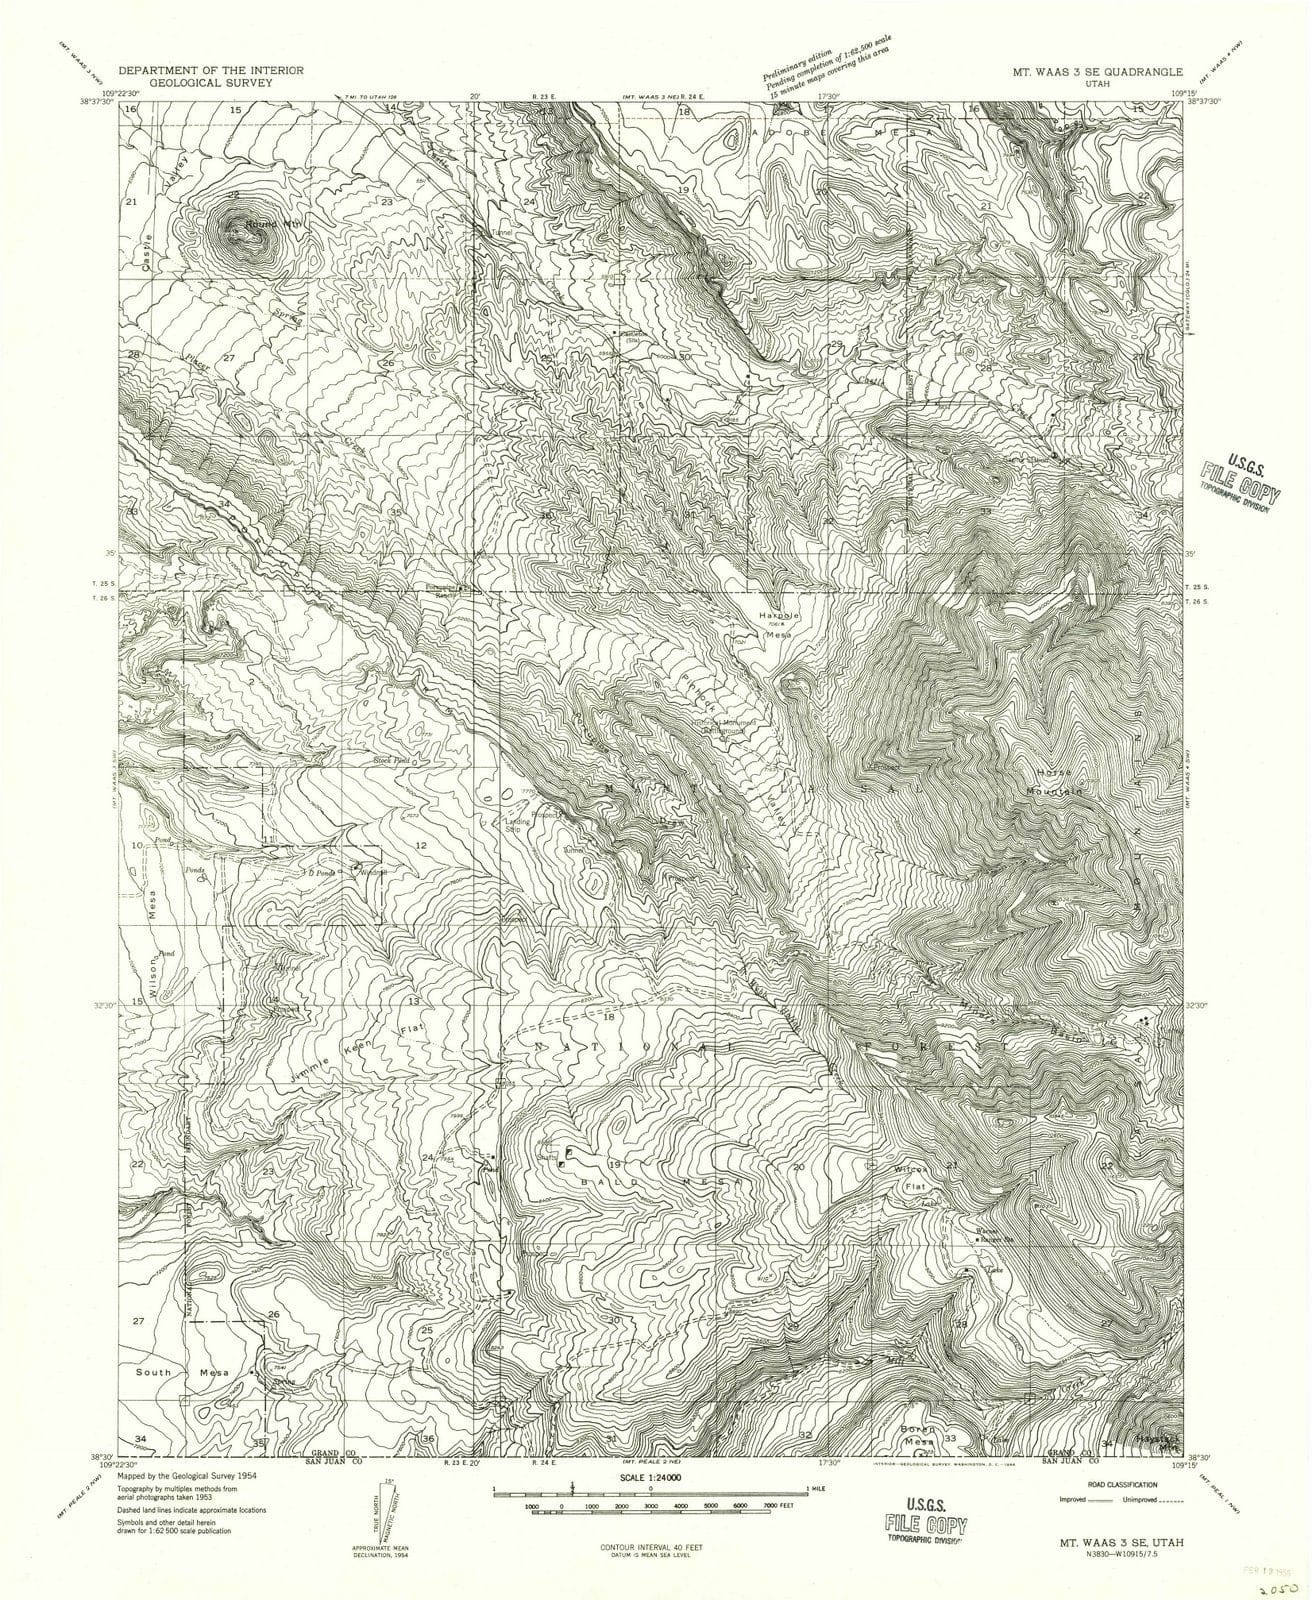 1954 Mt. Waas 3, UT - Utah - USGS Topographic Map v3